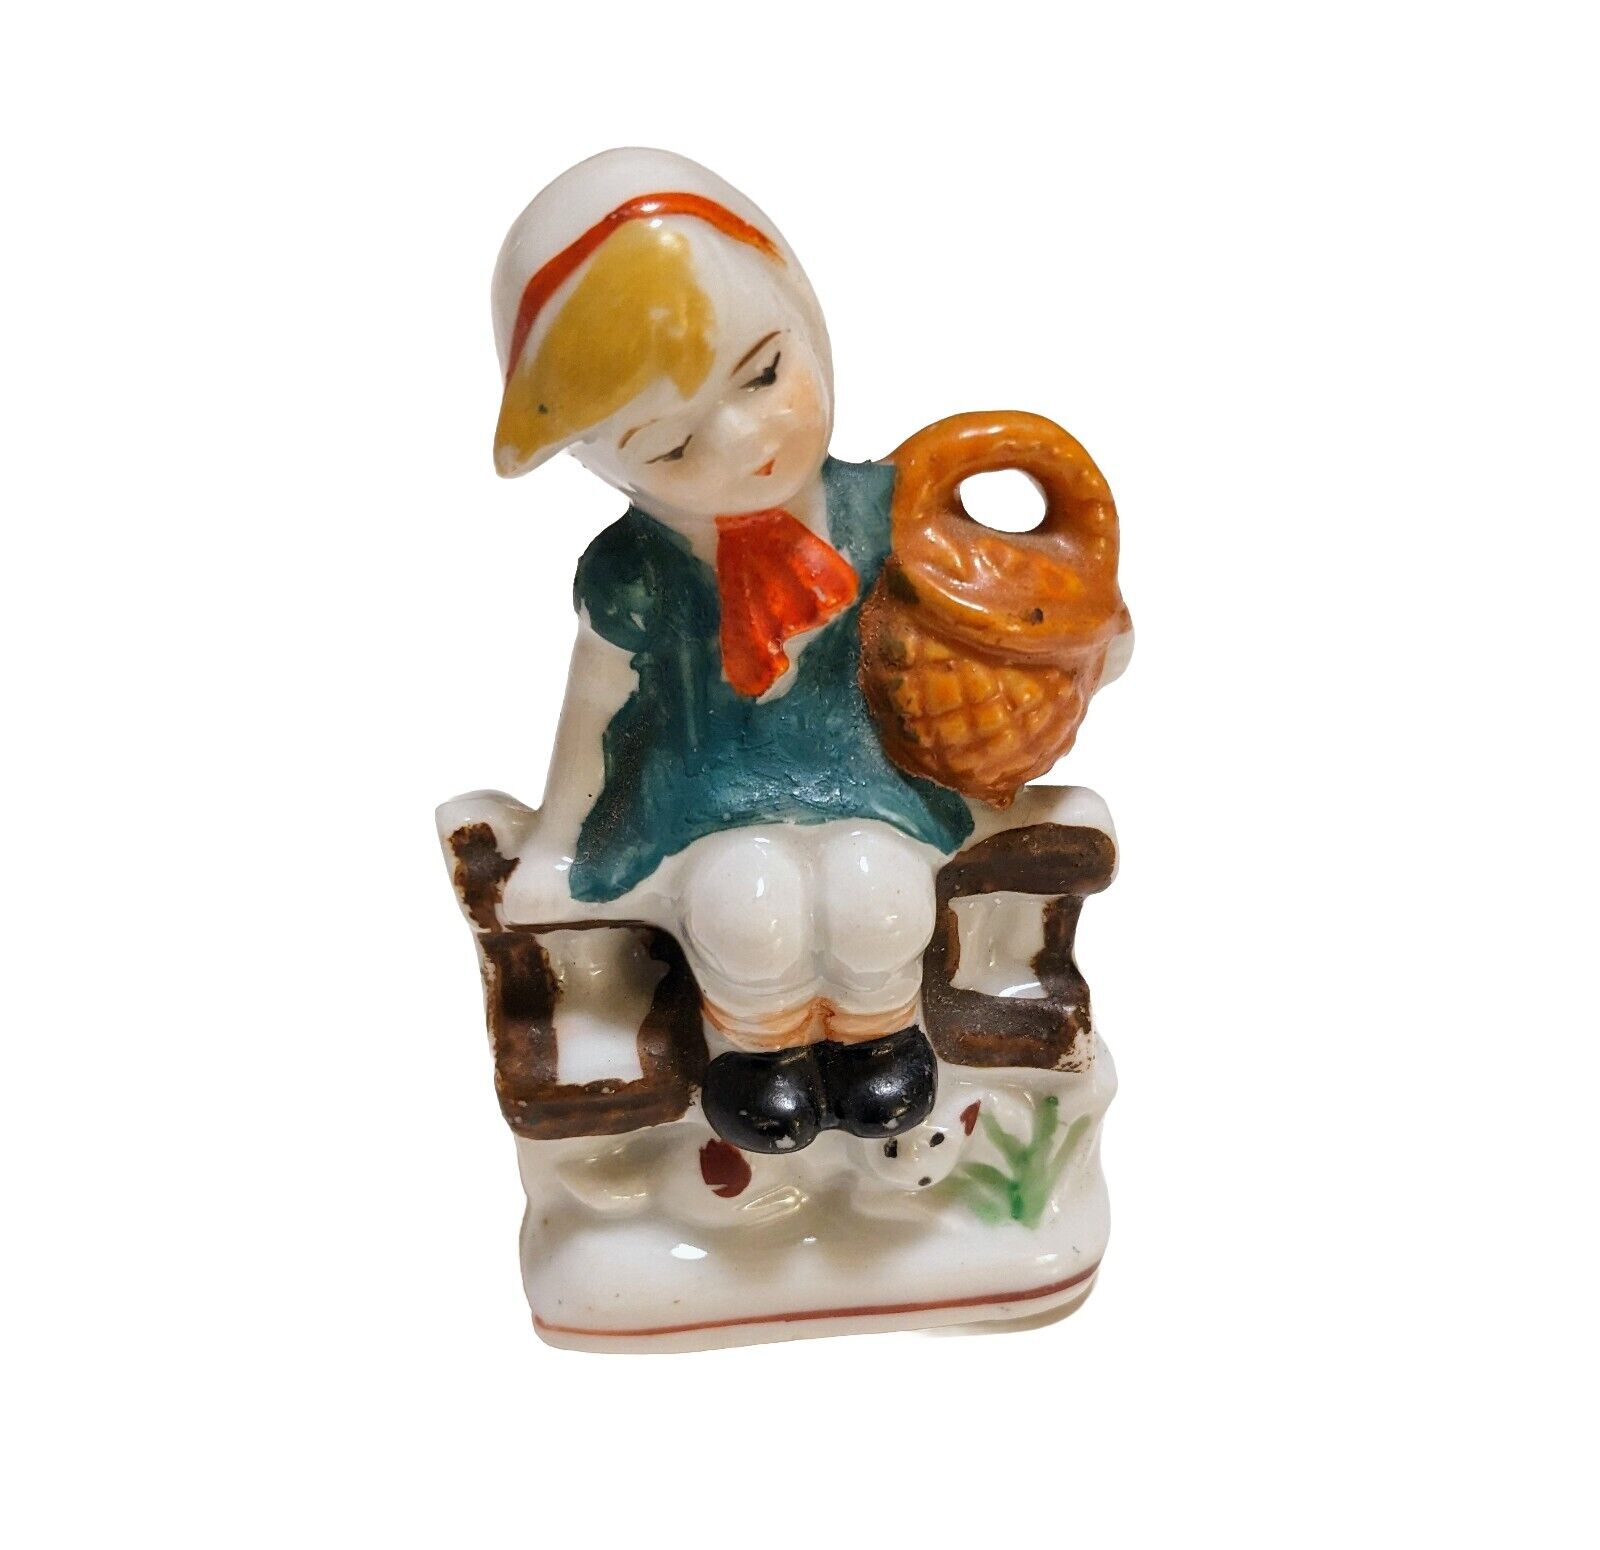 Occupied Japan Porcelain Little Girl Figurine Vintage Collectible Knick Knack 